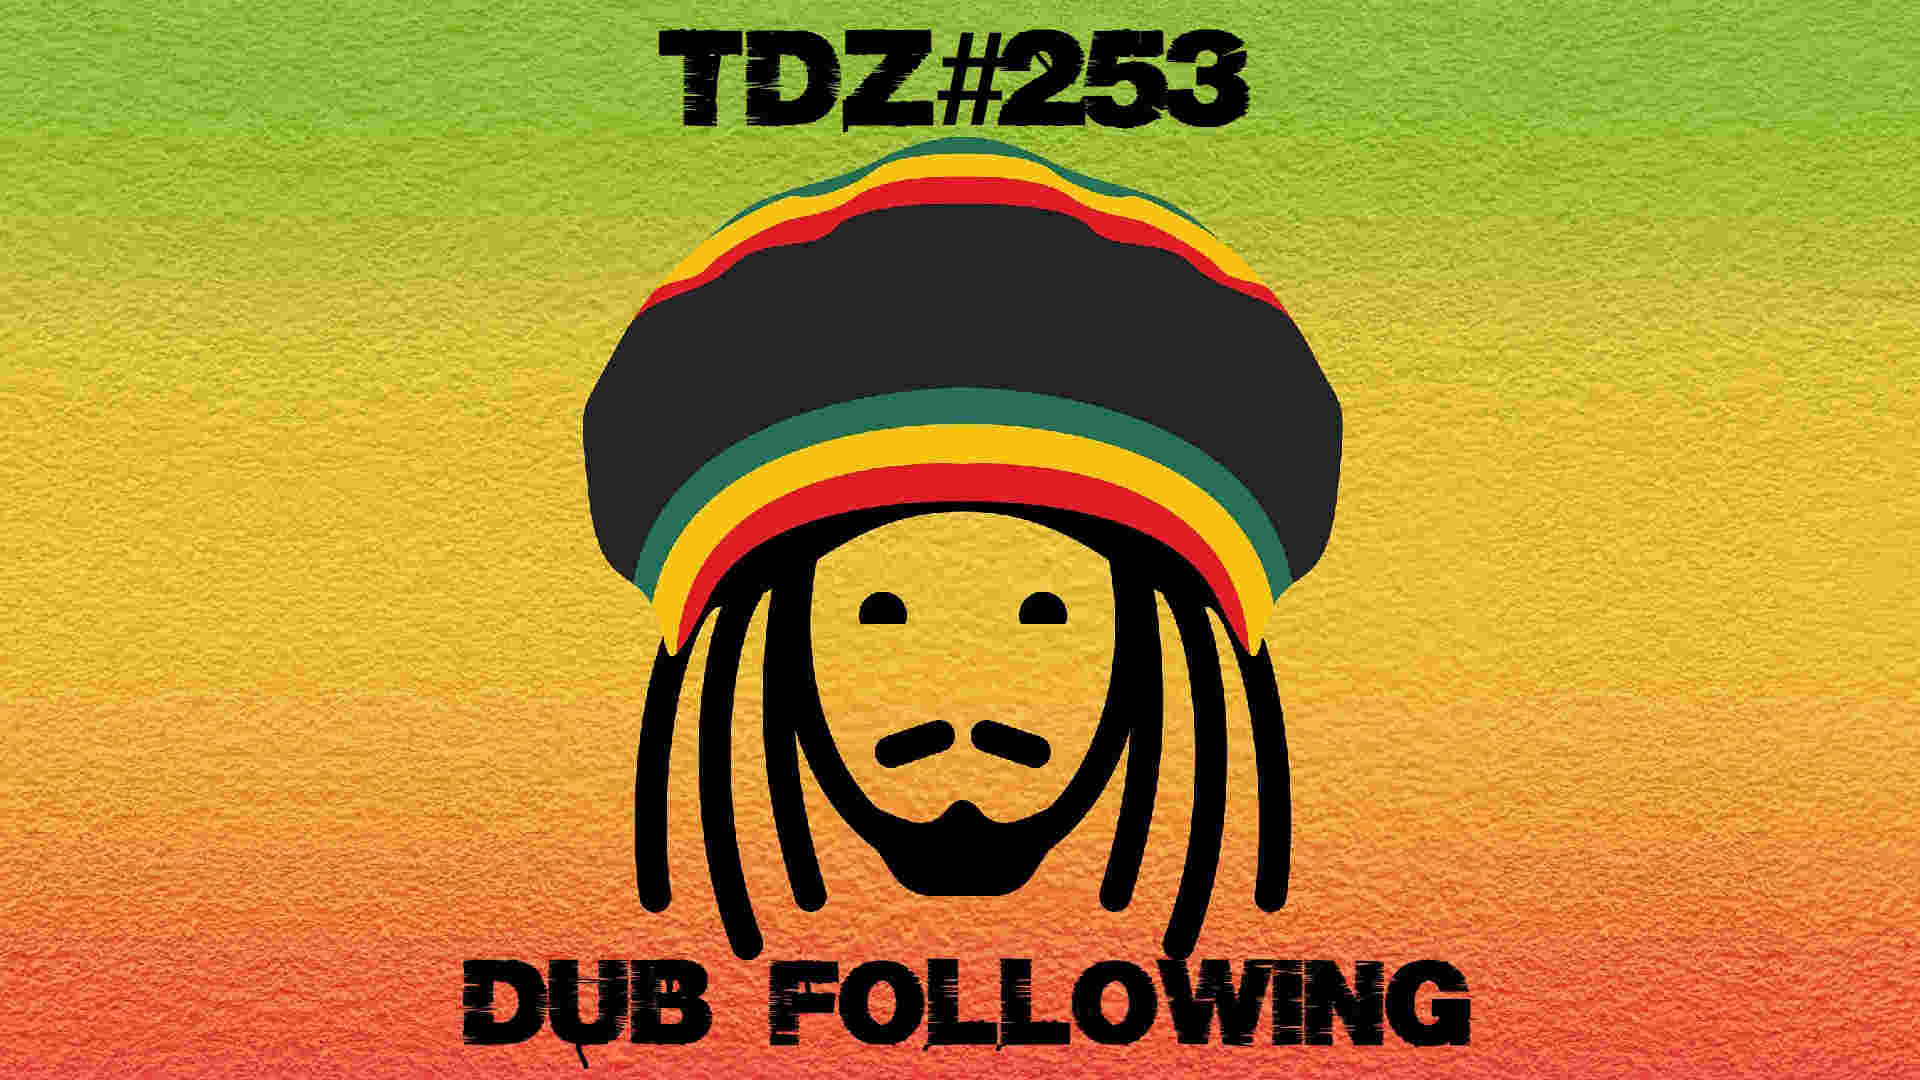 TDZ#254... Dub Following...